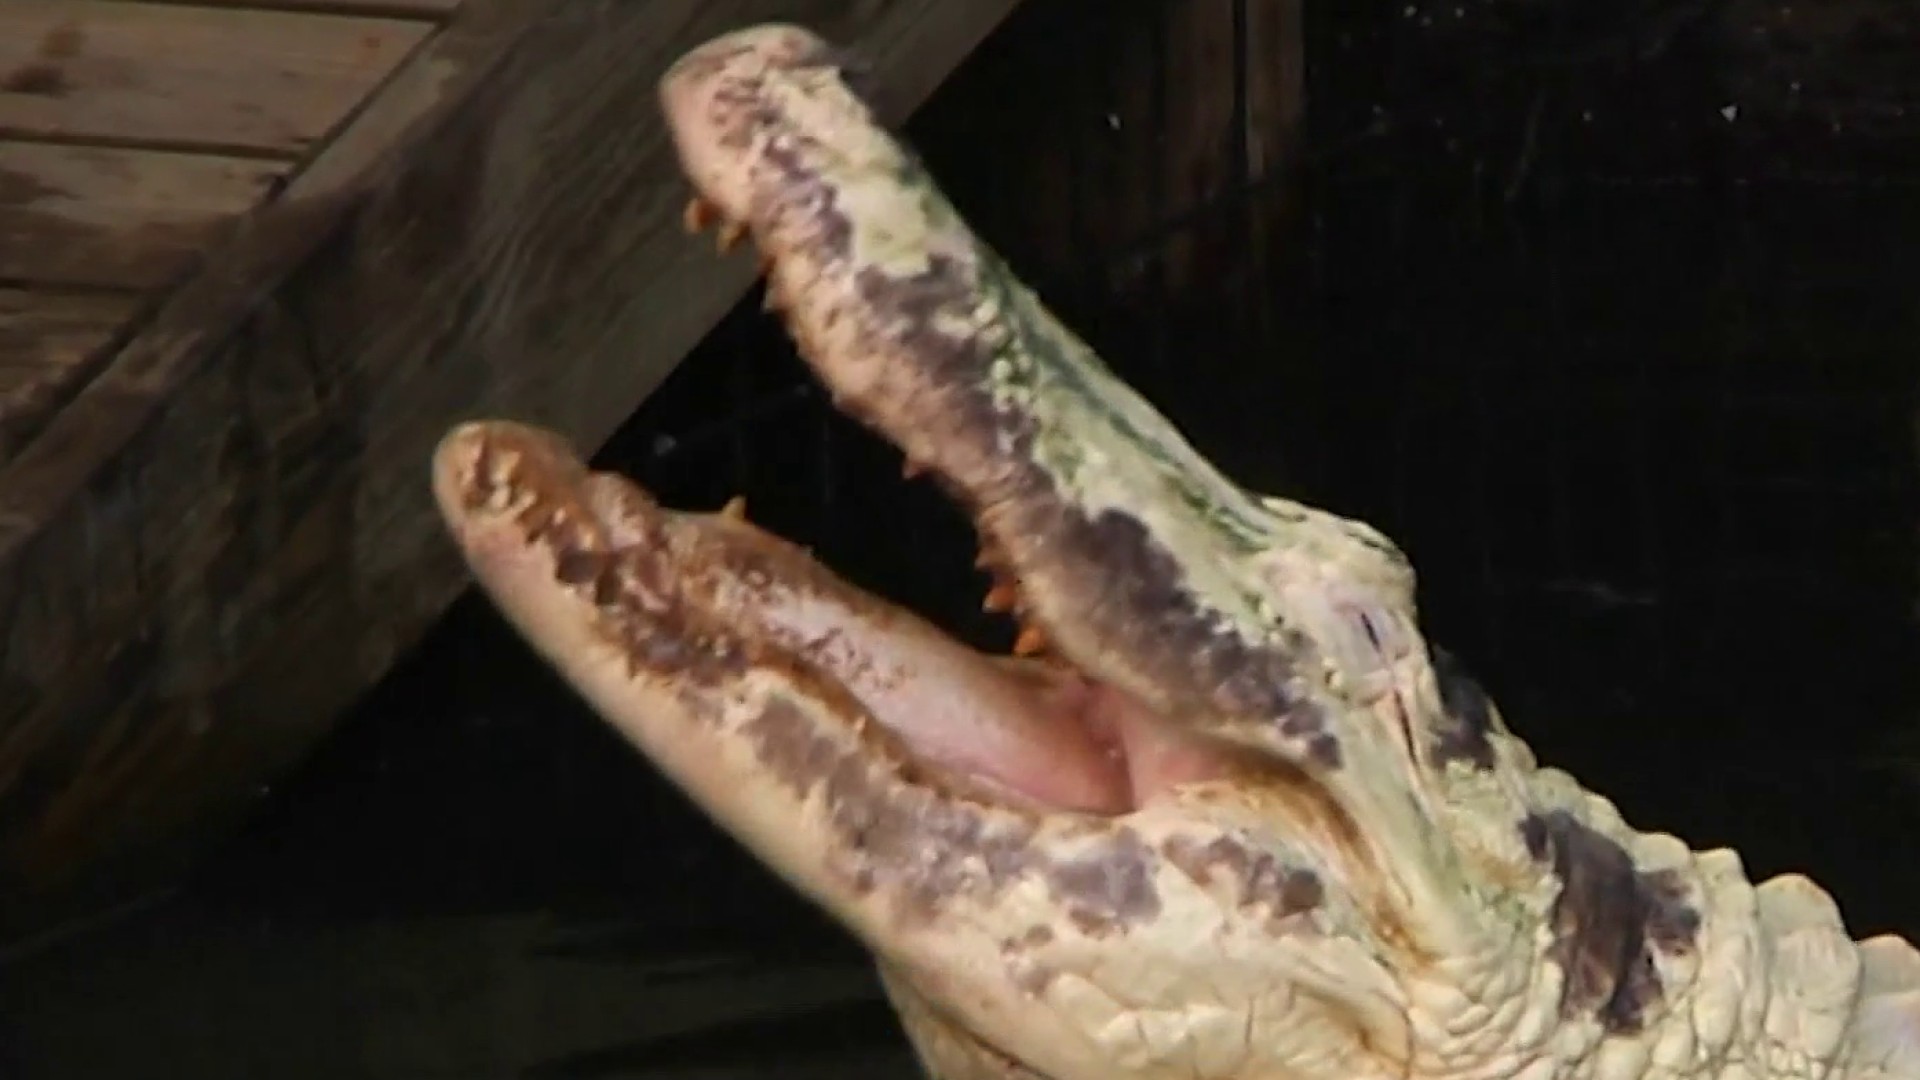 Differences Between Albino and Leucistic Crocodiles and Alligators